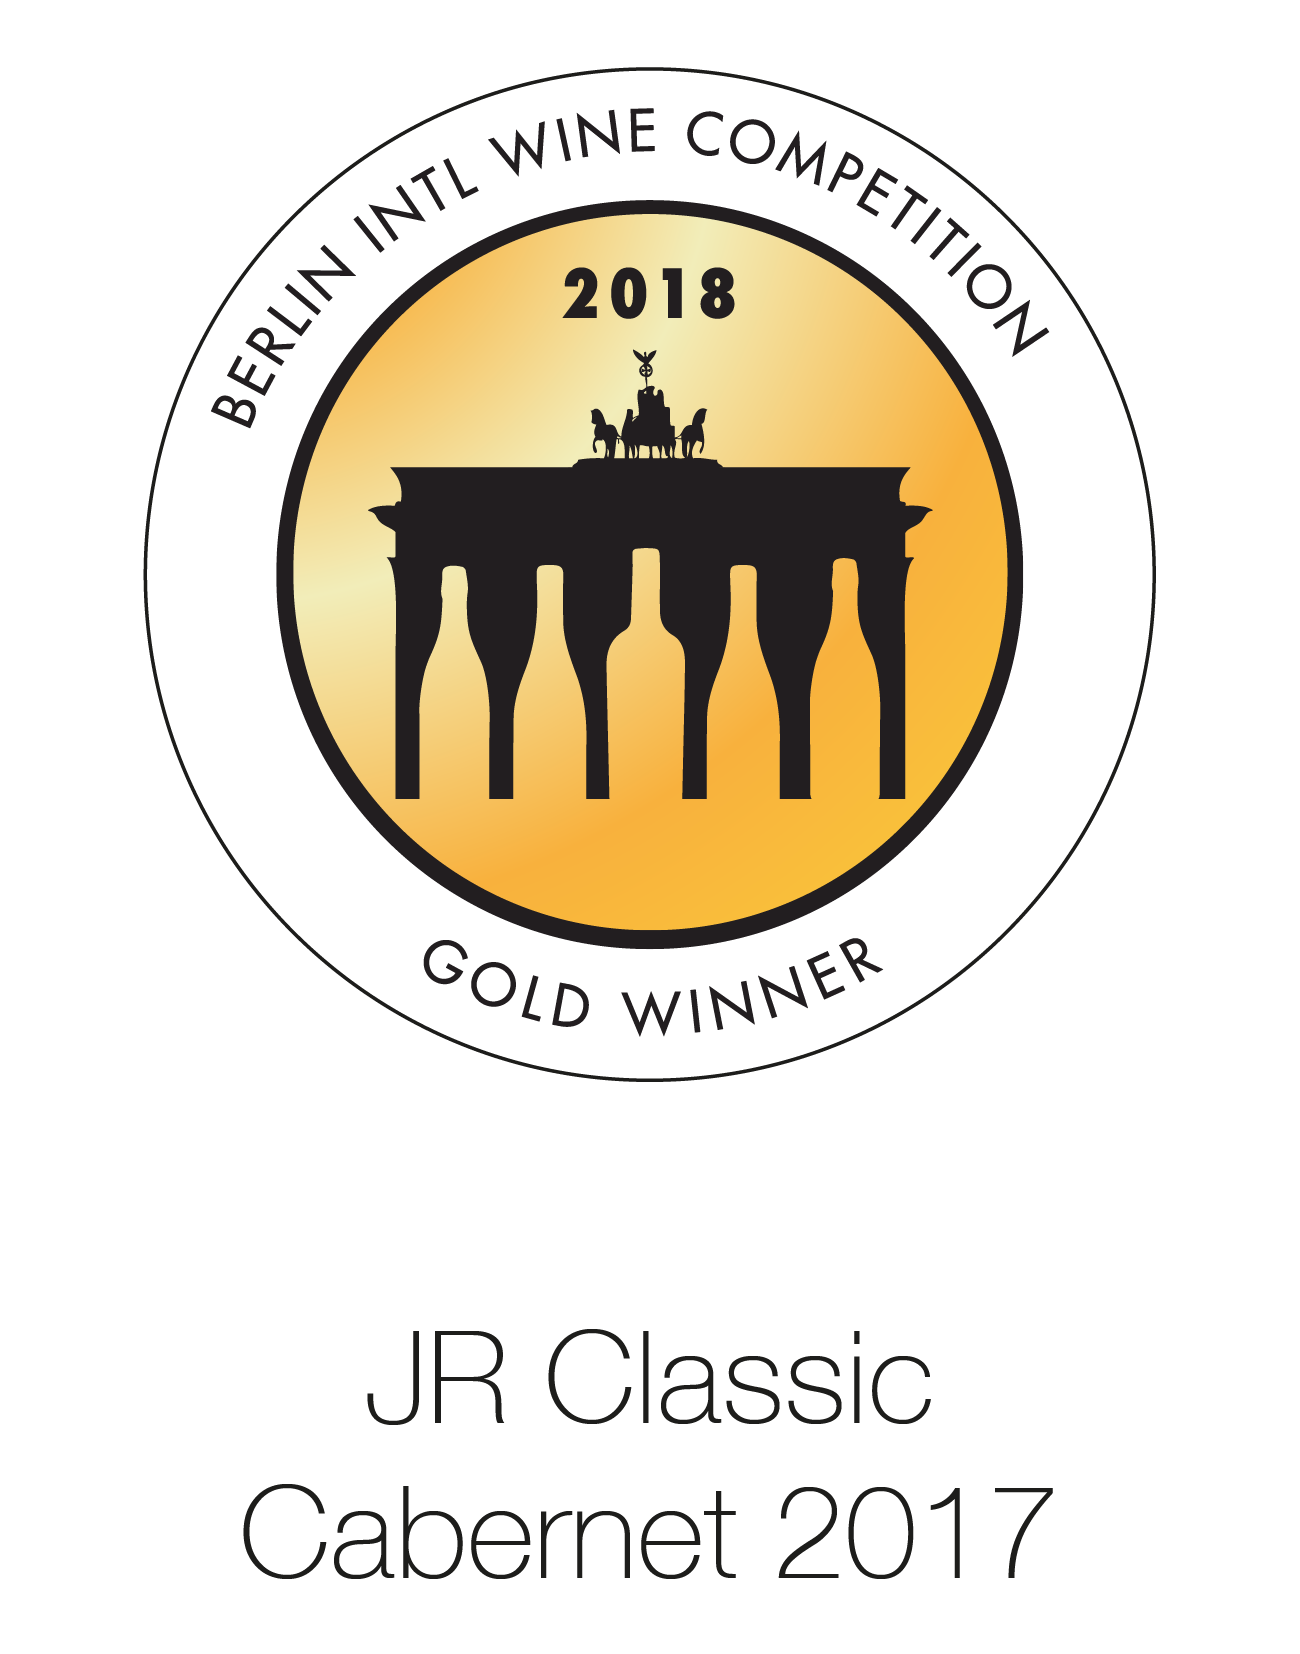 JR Classic - Cabernet Sauvignon 2017 - Berlin International Wine Competition 2018